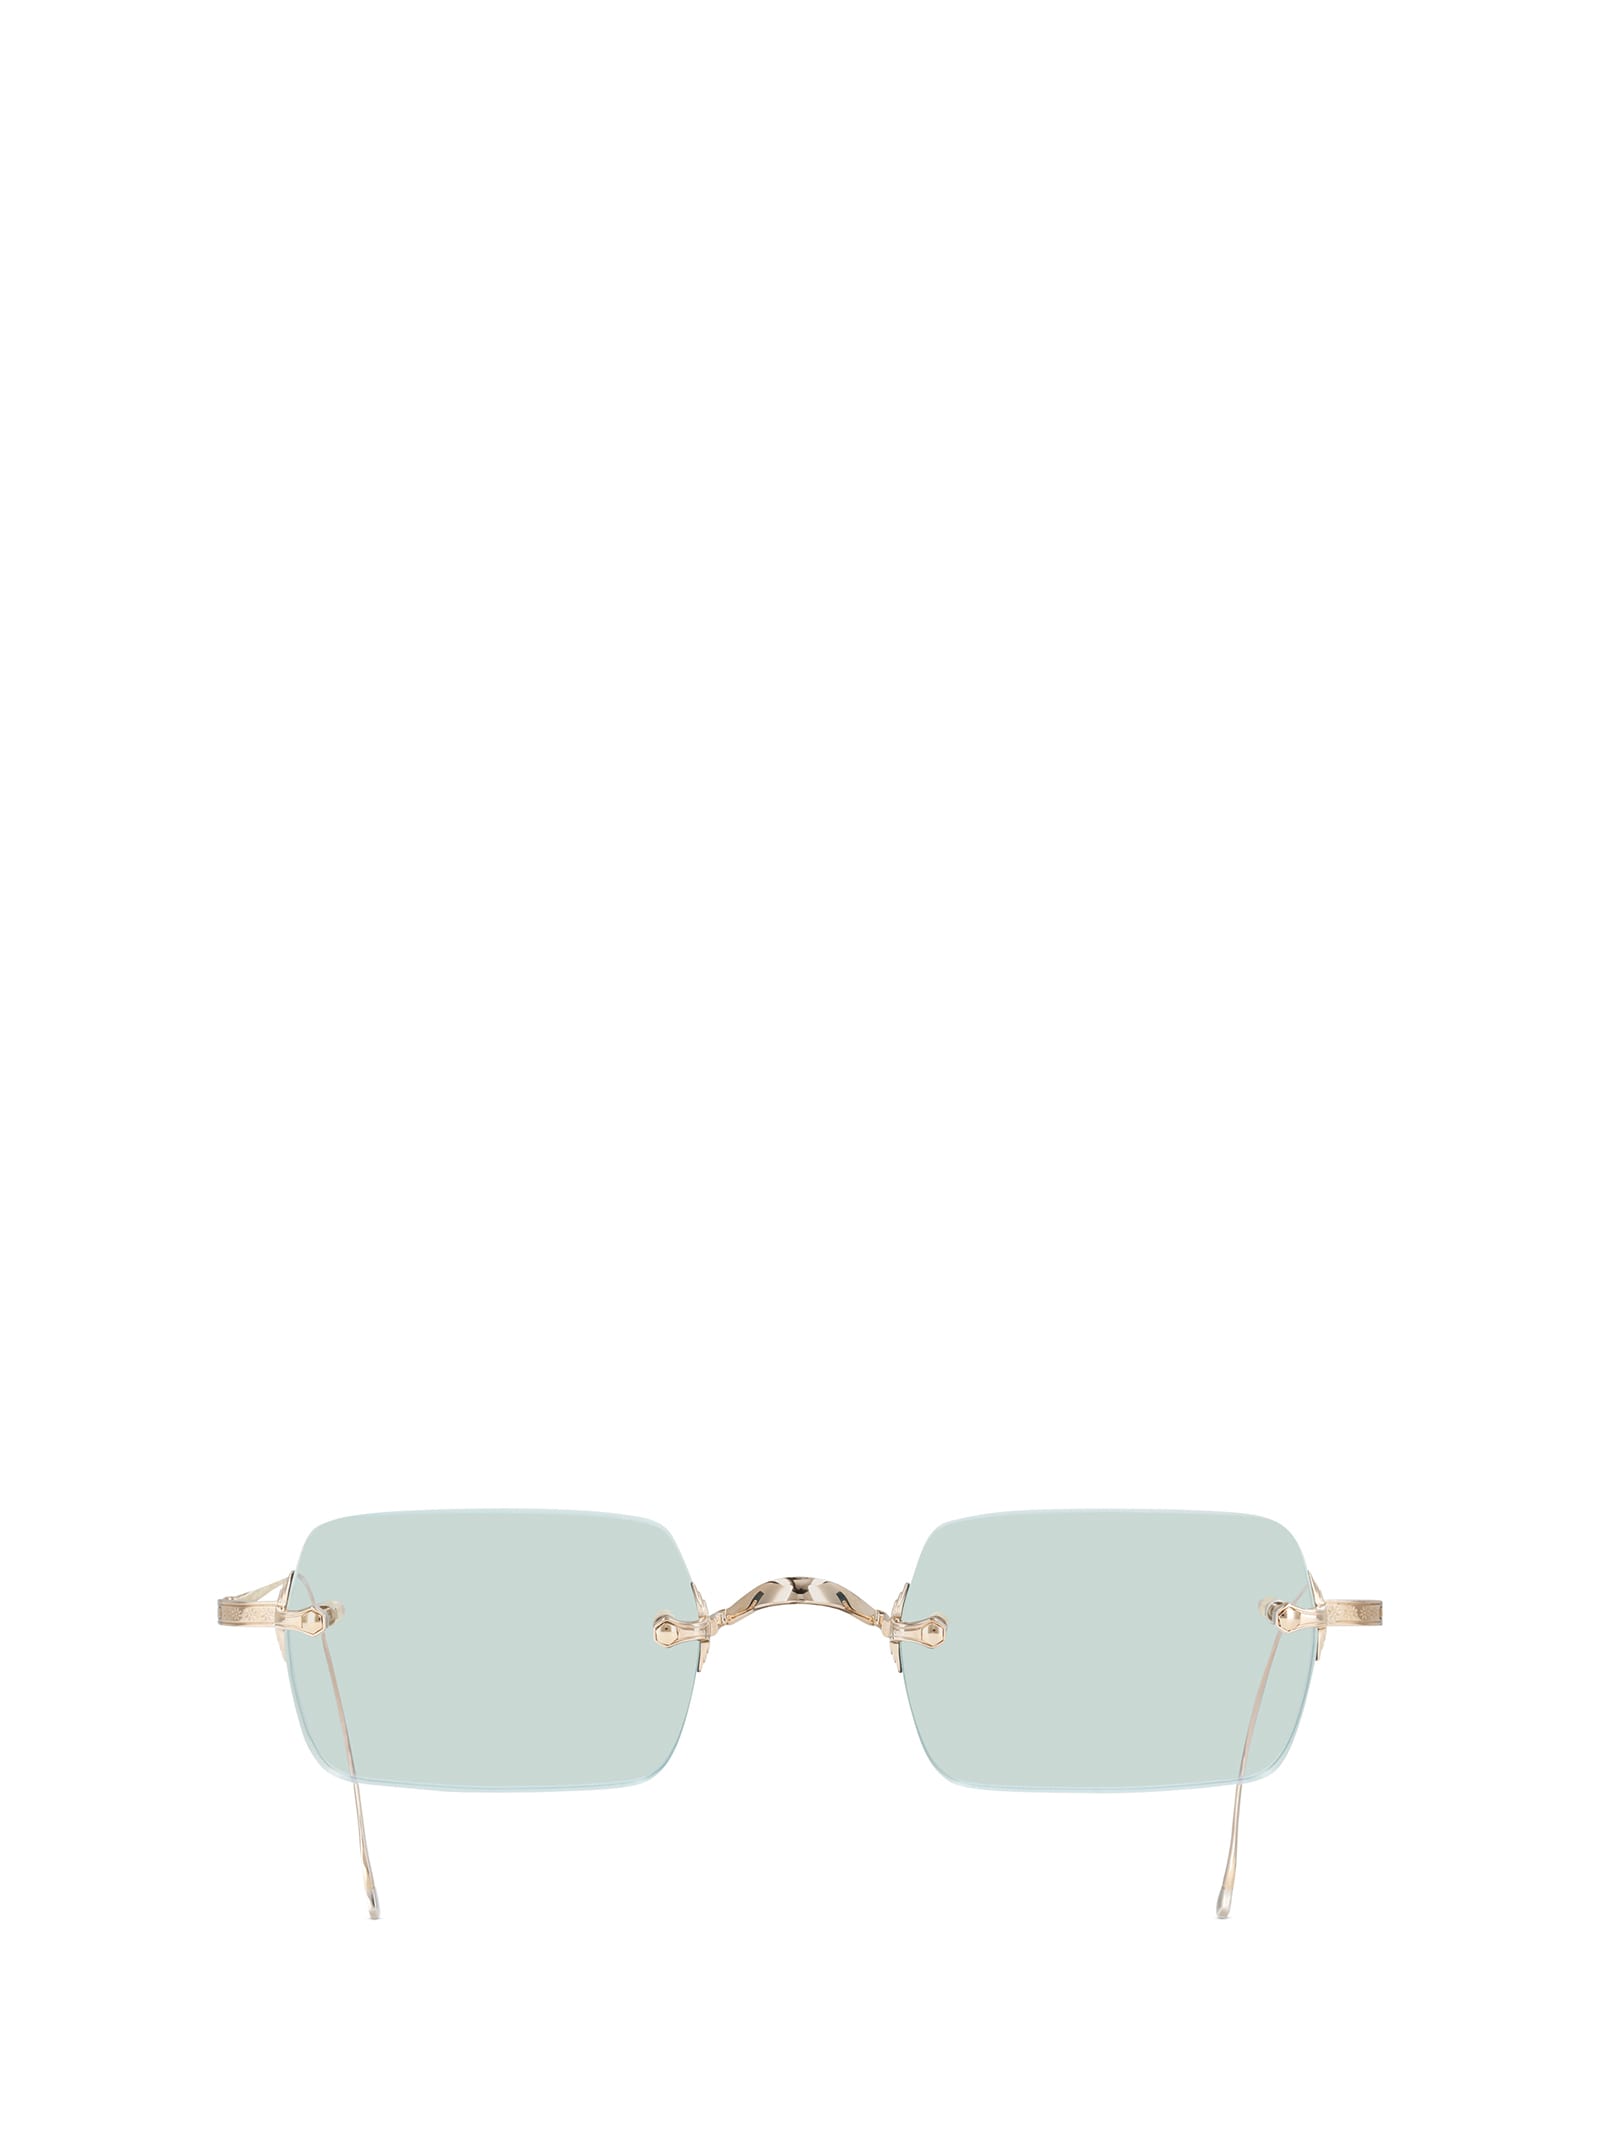 Shop Mr Leight Banzai S 12k White Gold Sunglasses